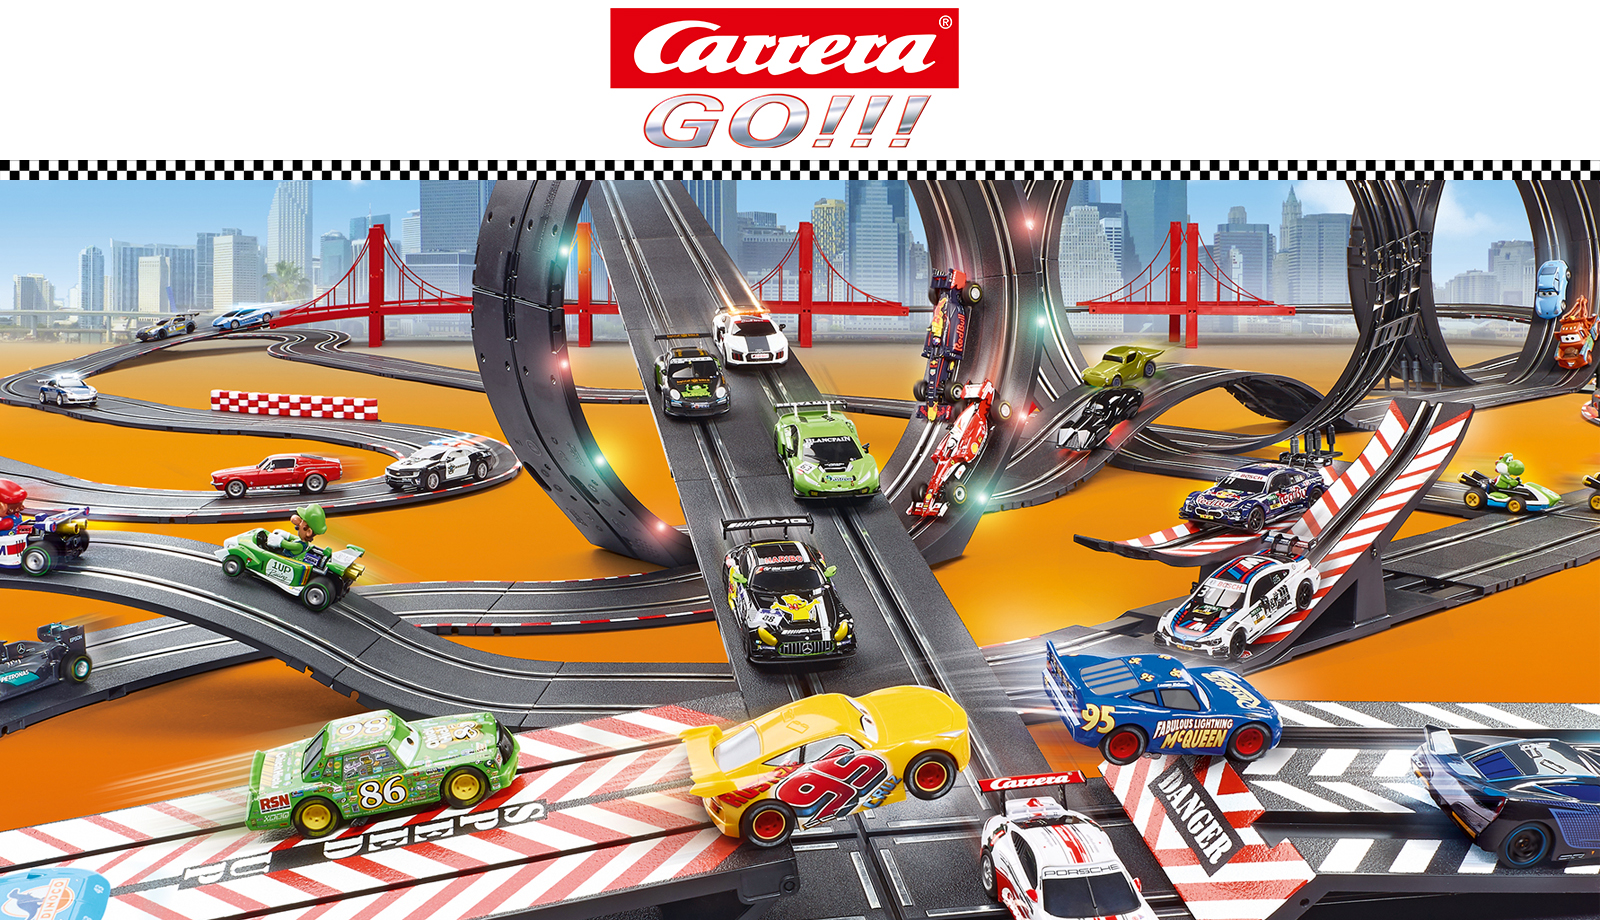 Carrera GO!!! Coffret Speed Competition 62546